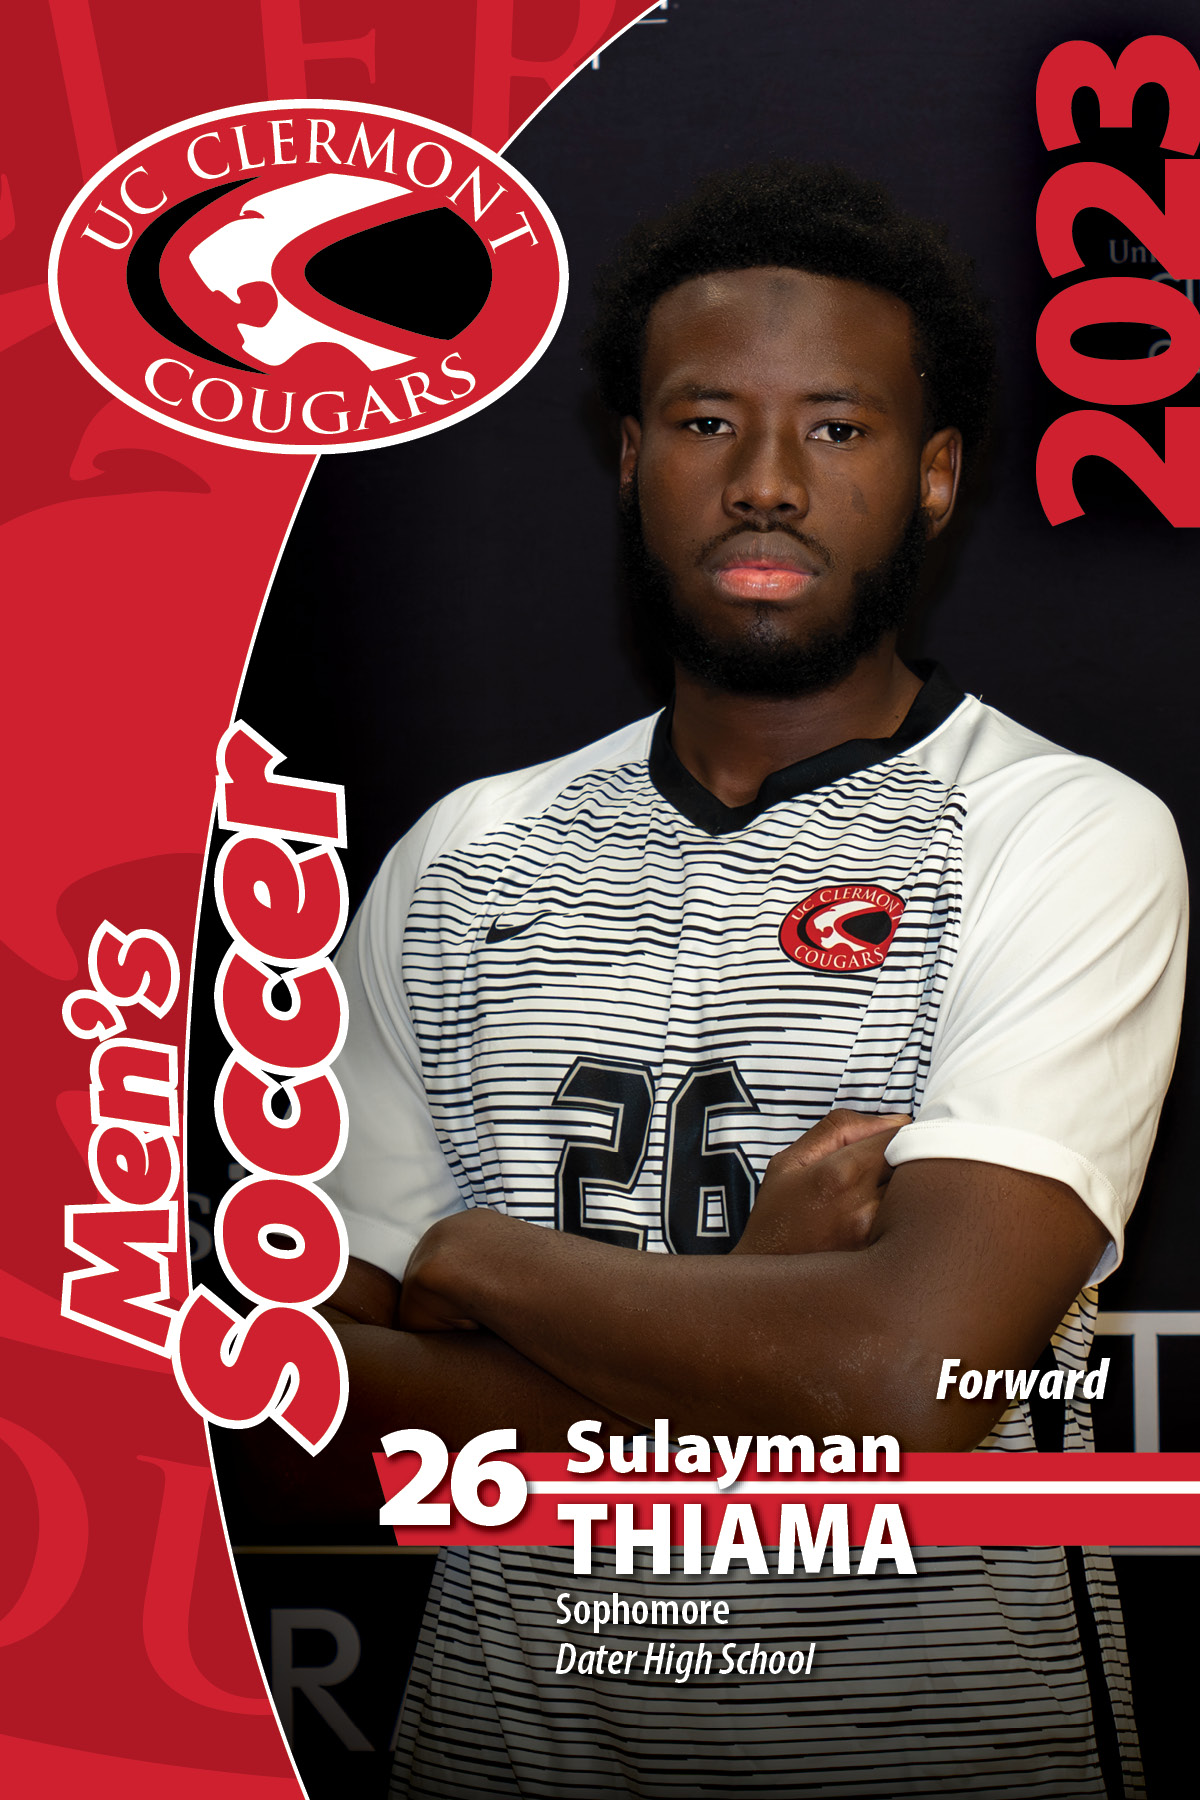 26 - Sulayman Thiama